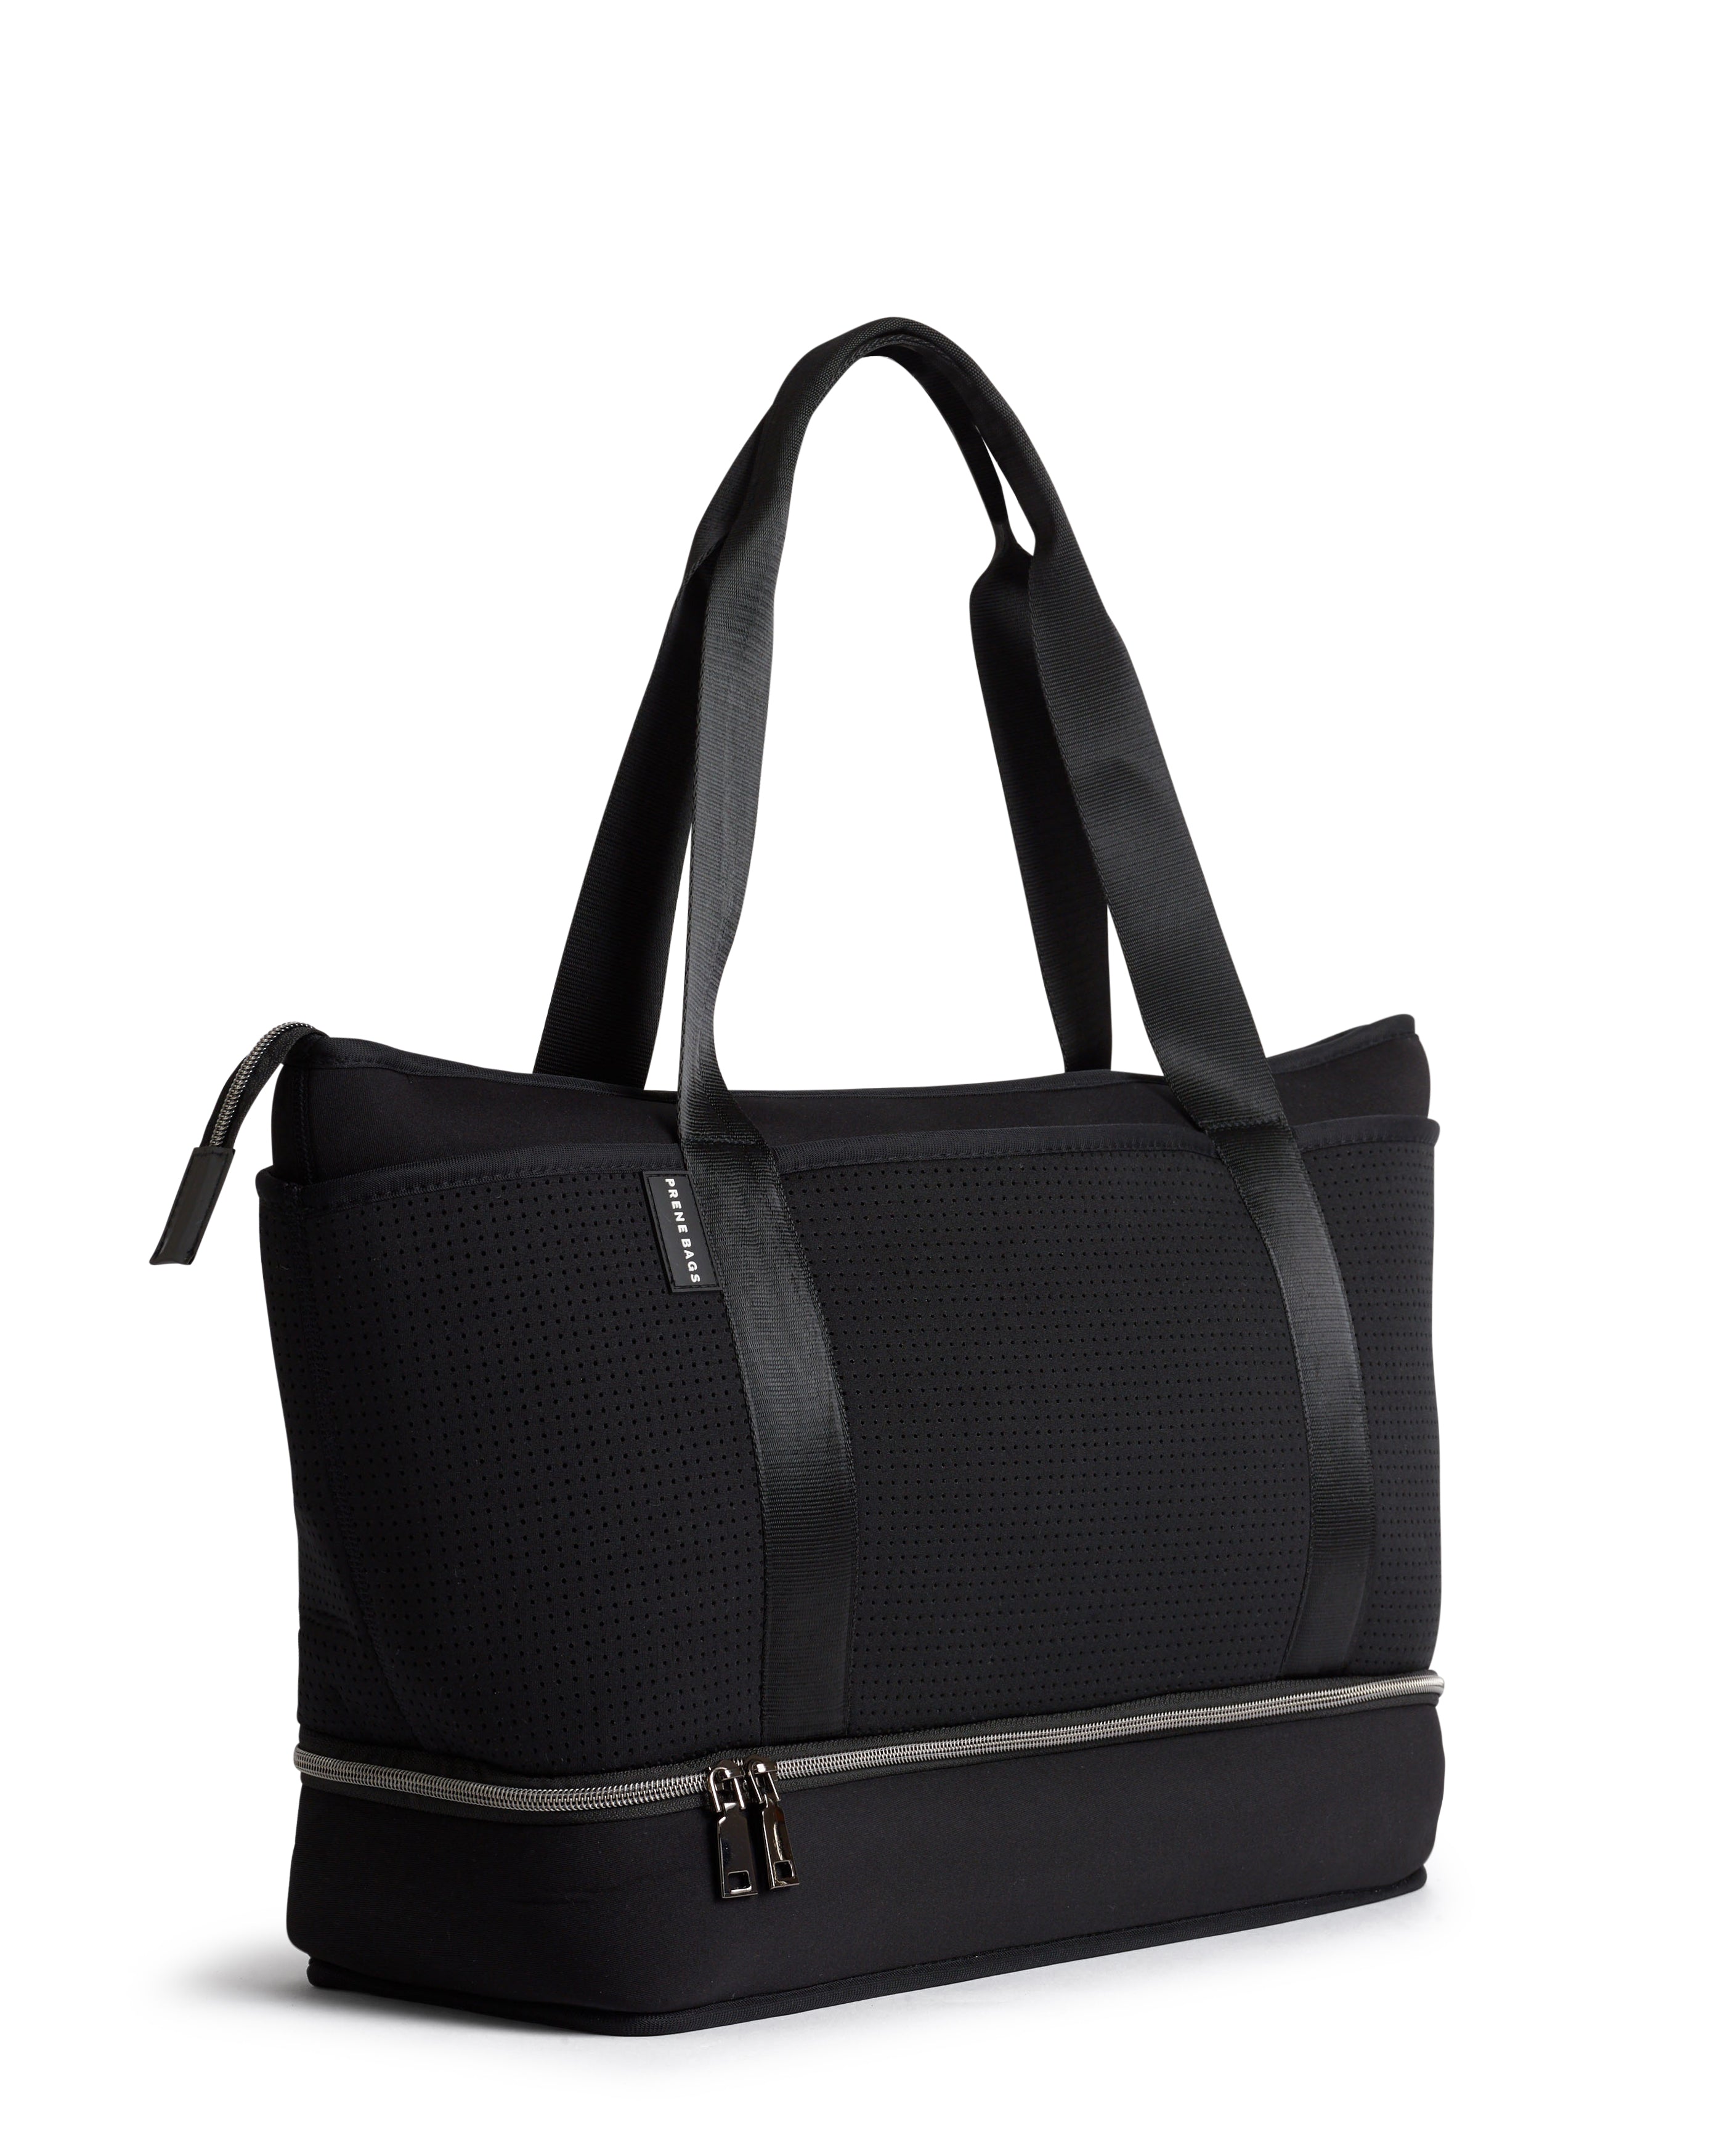 Prene Bags - The Sunday Bag (BLACK) Neoprene Baby/Diaper/Nappy/Gym Bag